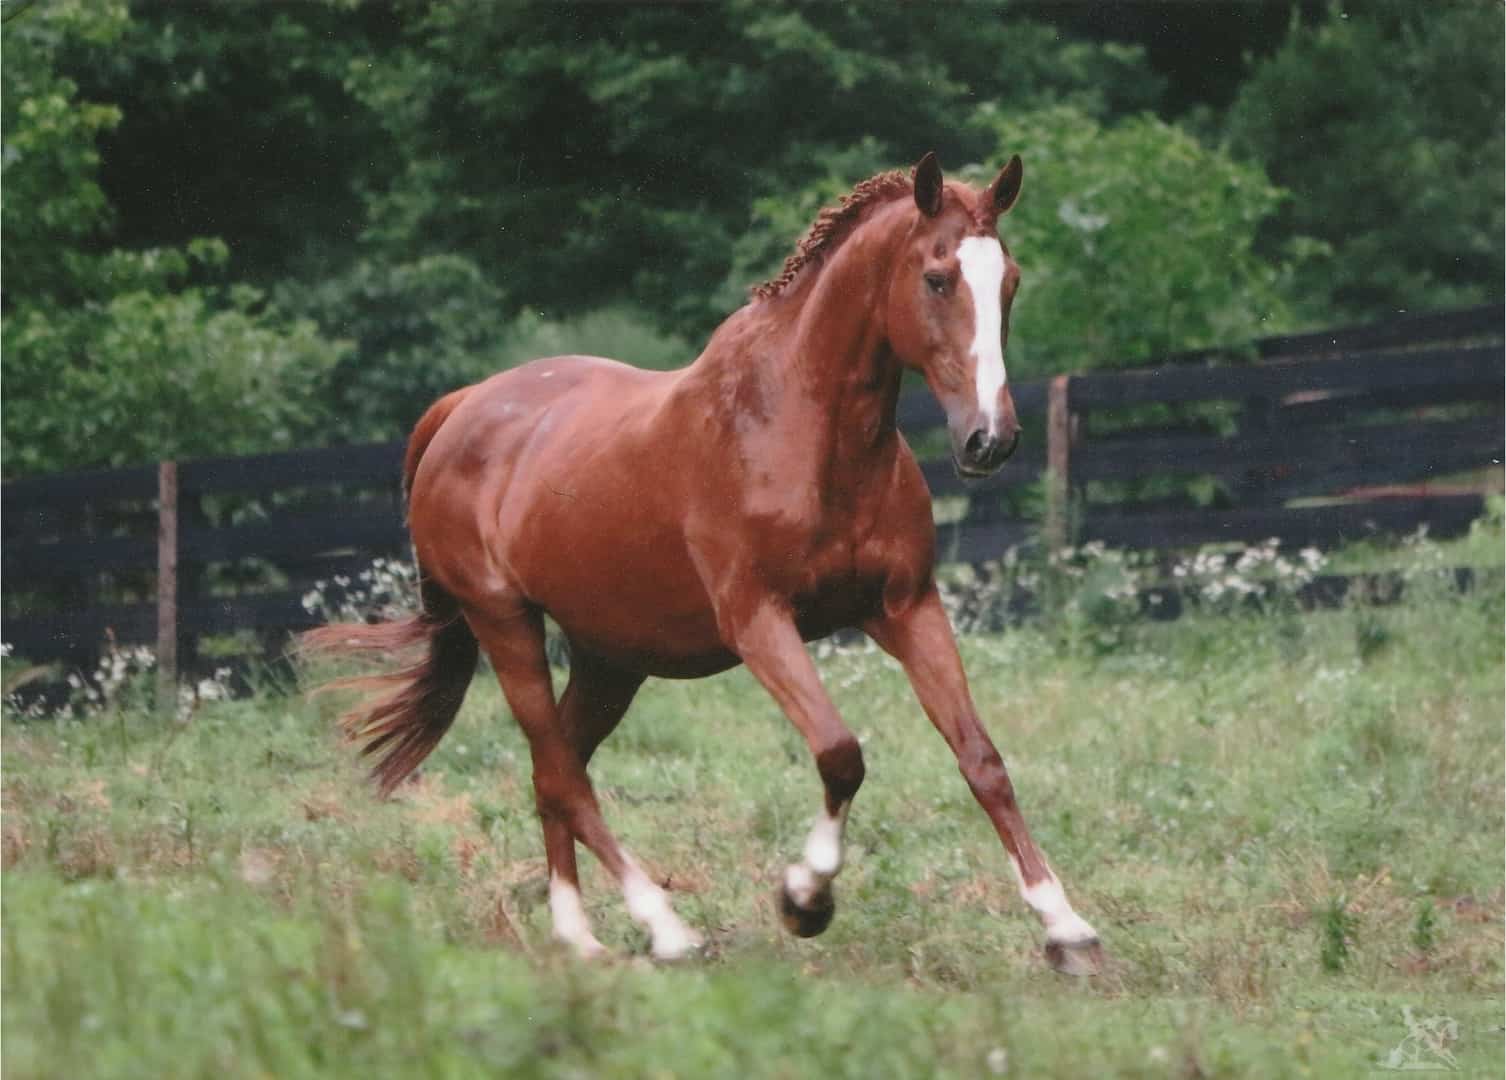 Chestnut horse in a field